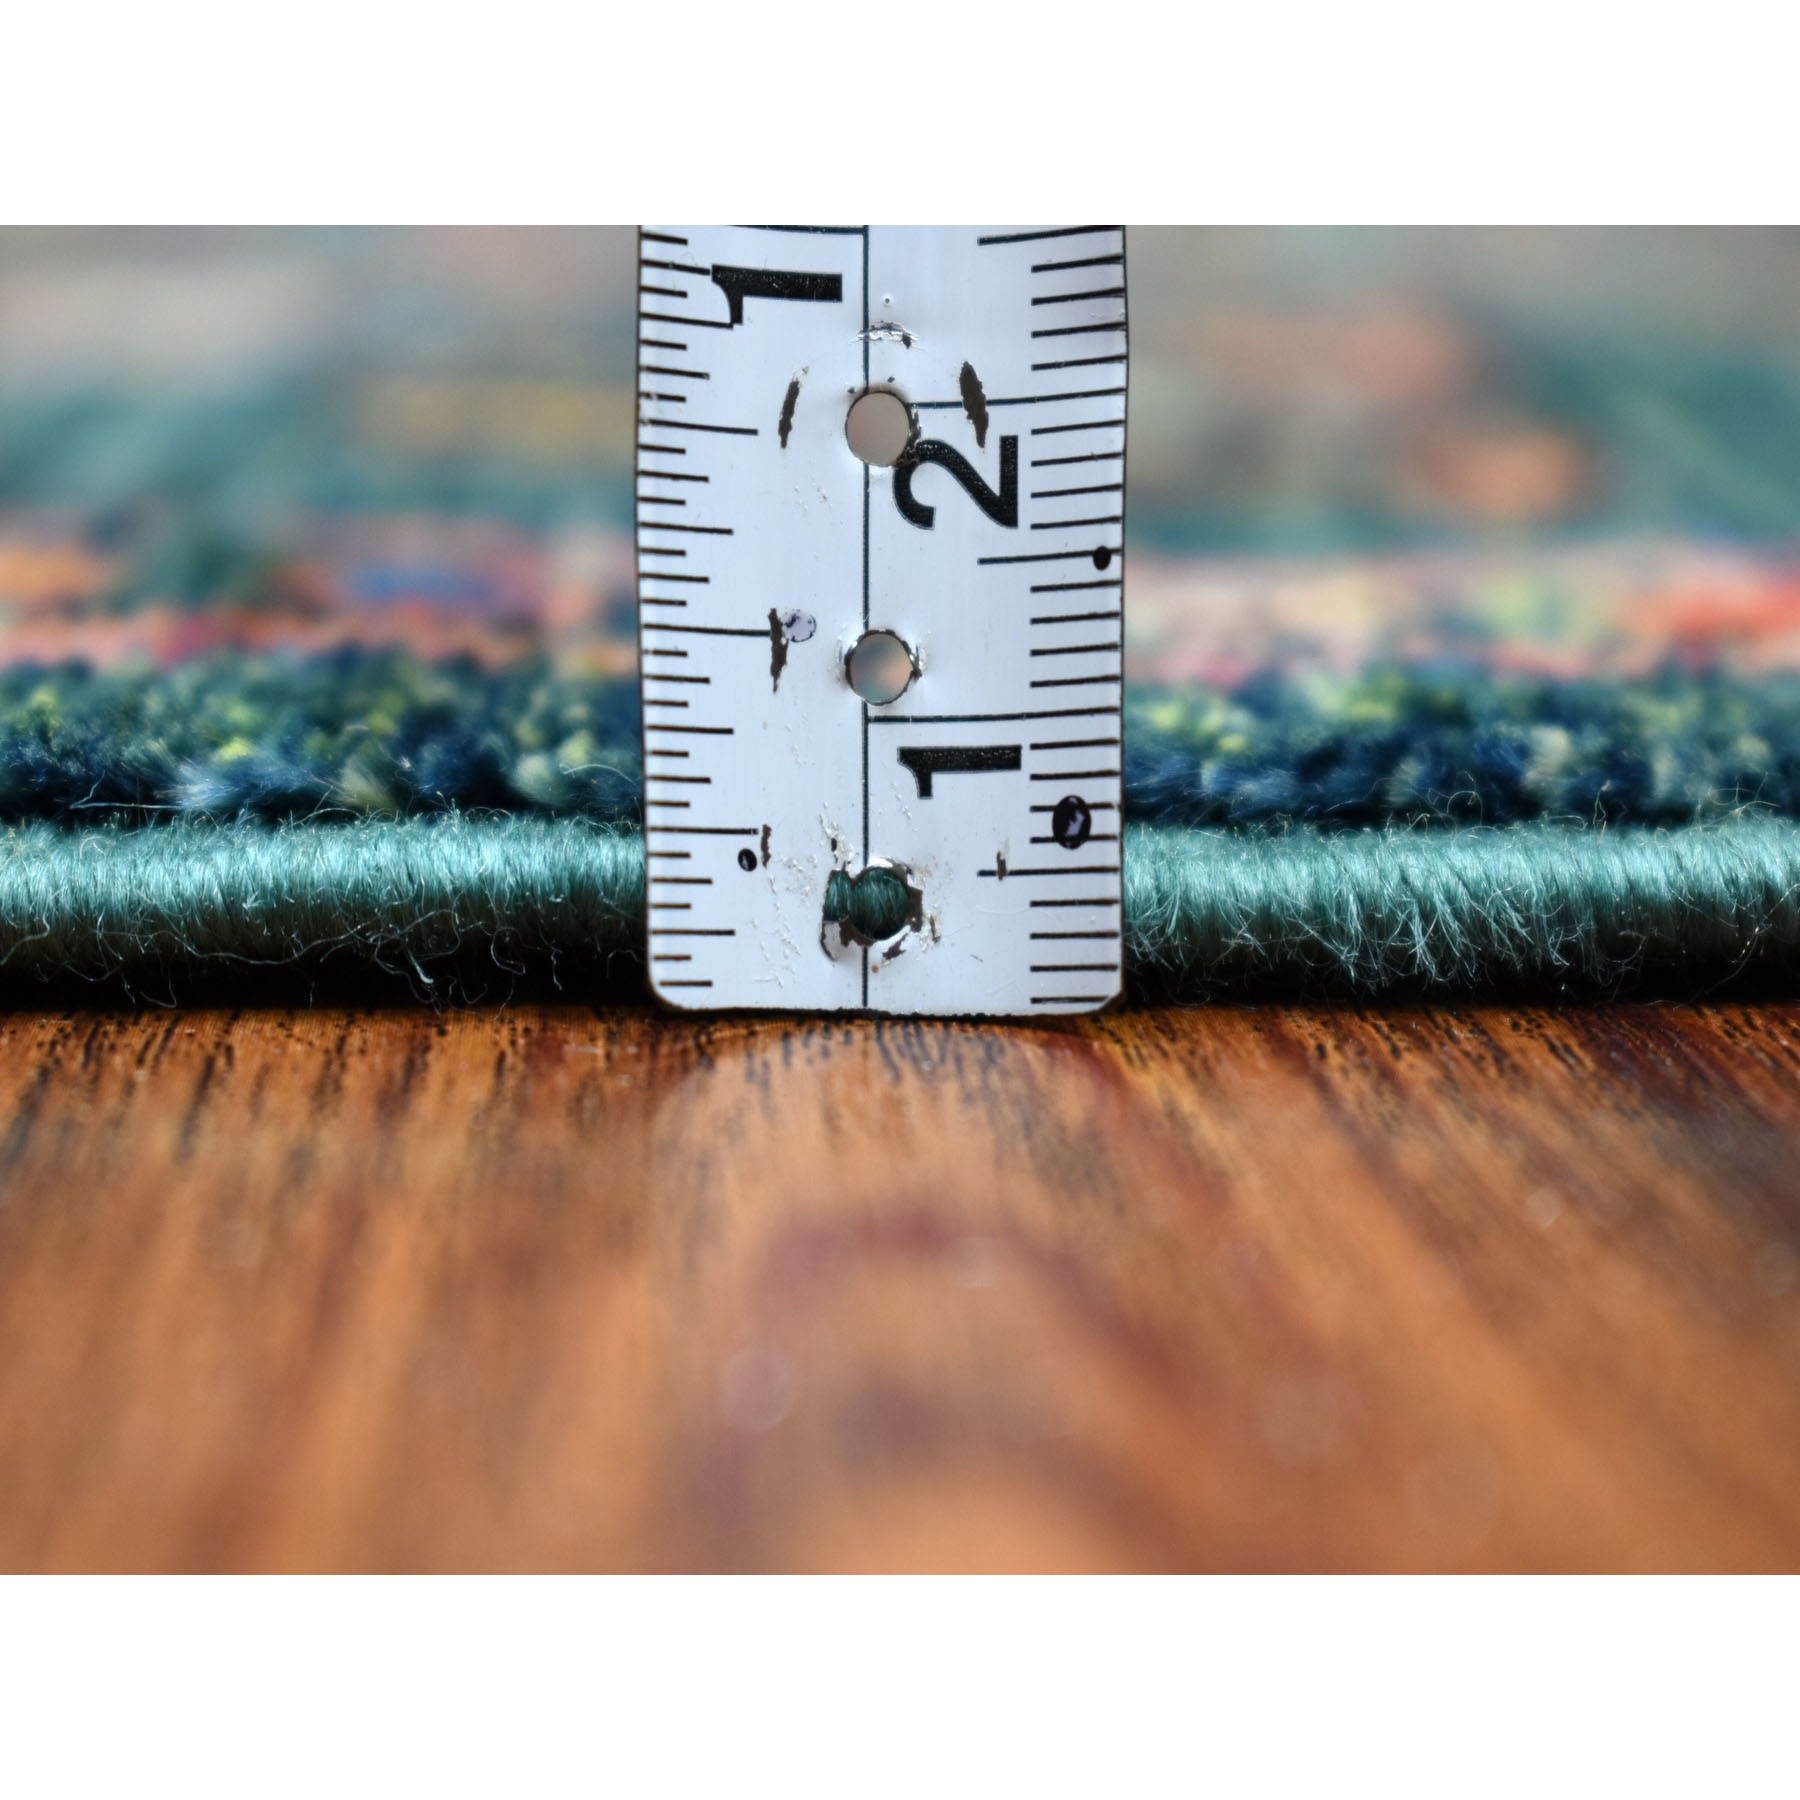 2-8 x4- Green Kashkuli Design Super Kazak Pictorial Hand Knotted Pure Wool Oriental Rug 